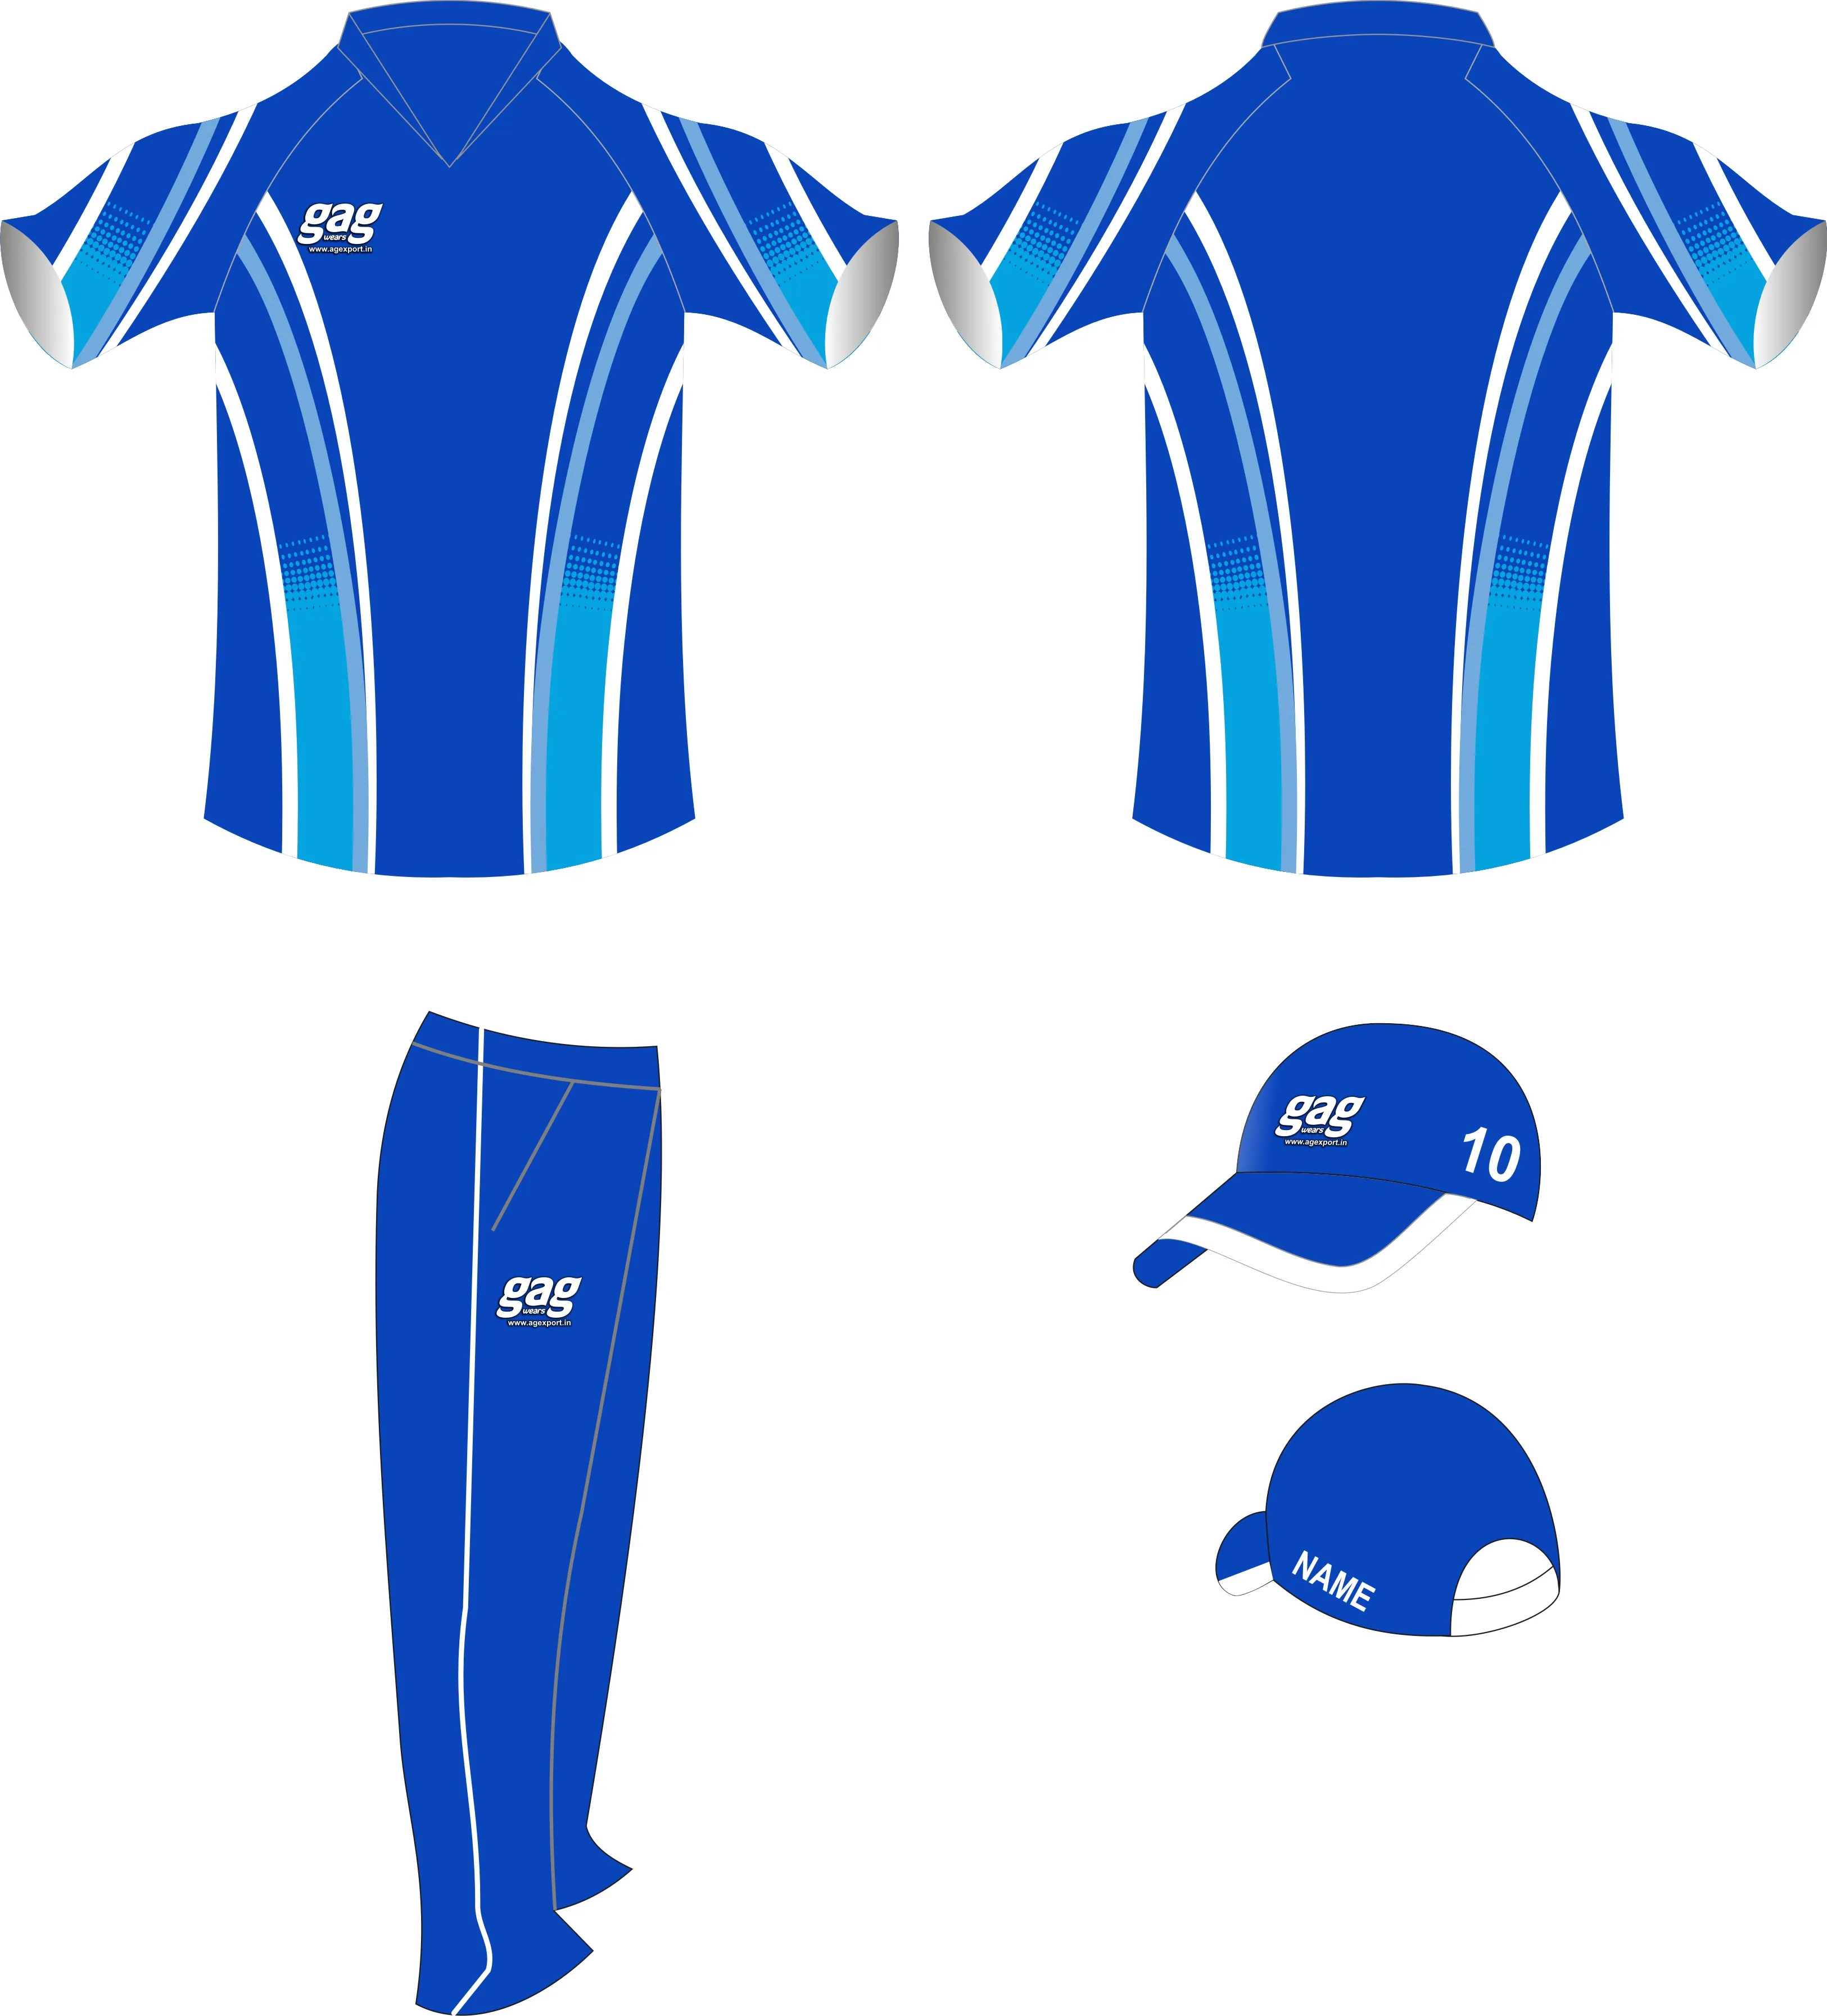 cricket dress for kid